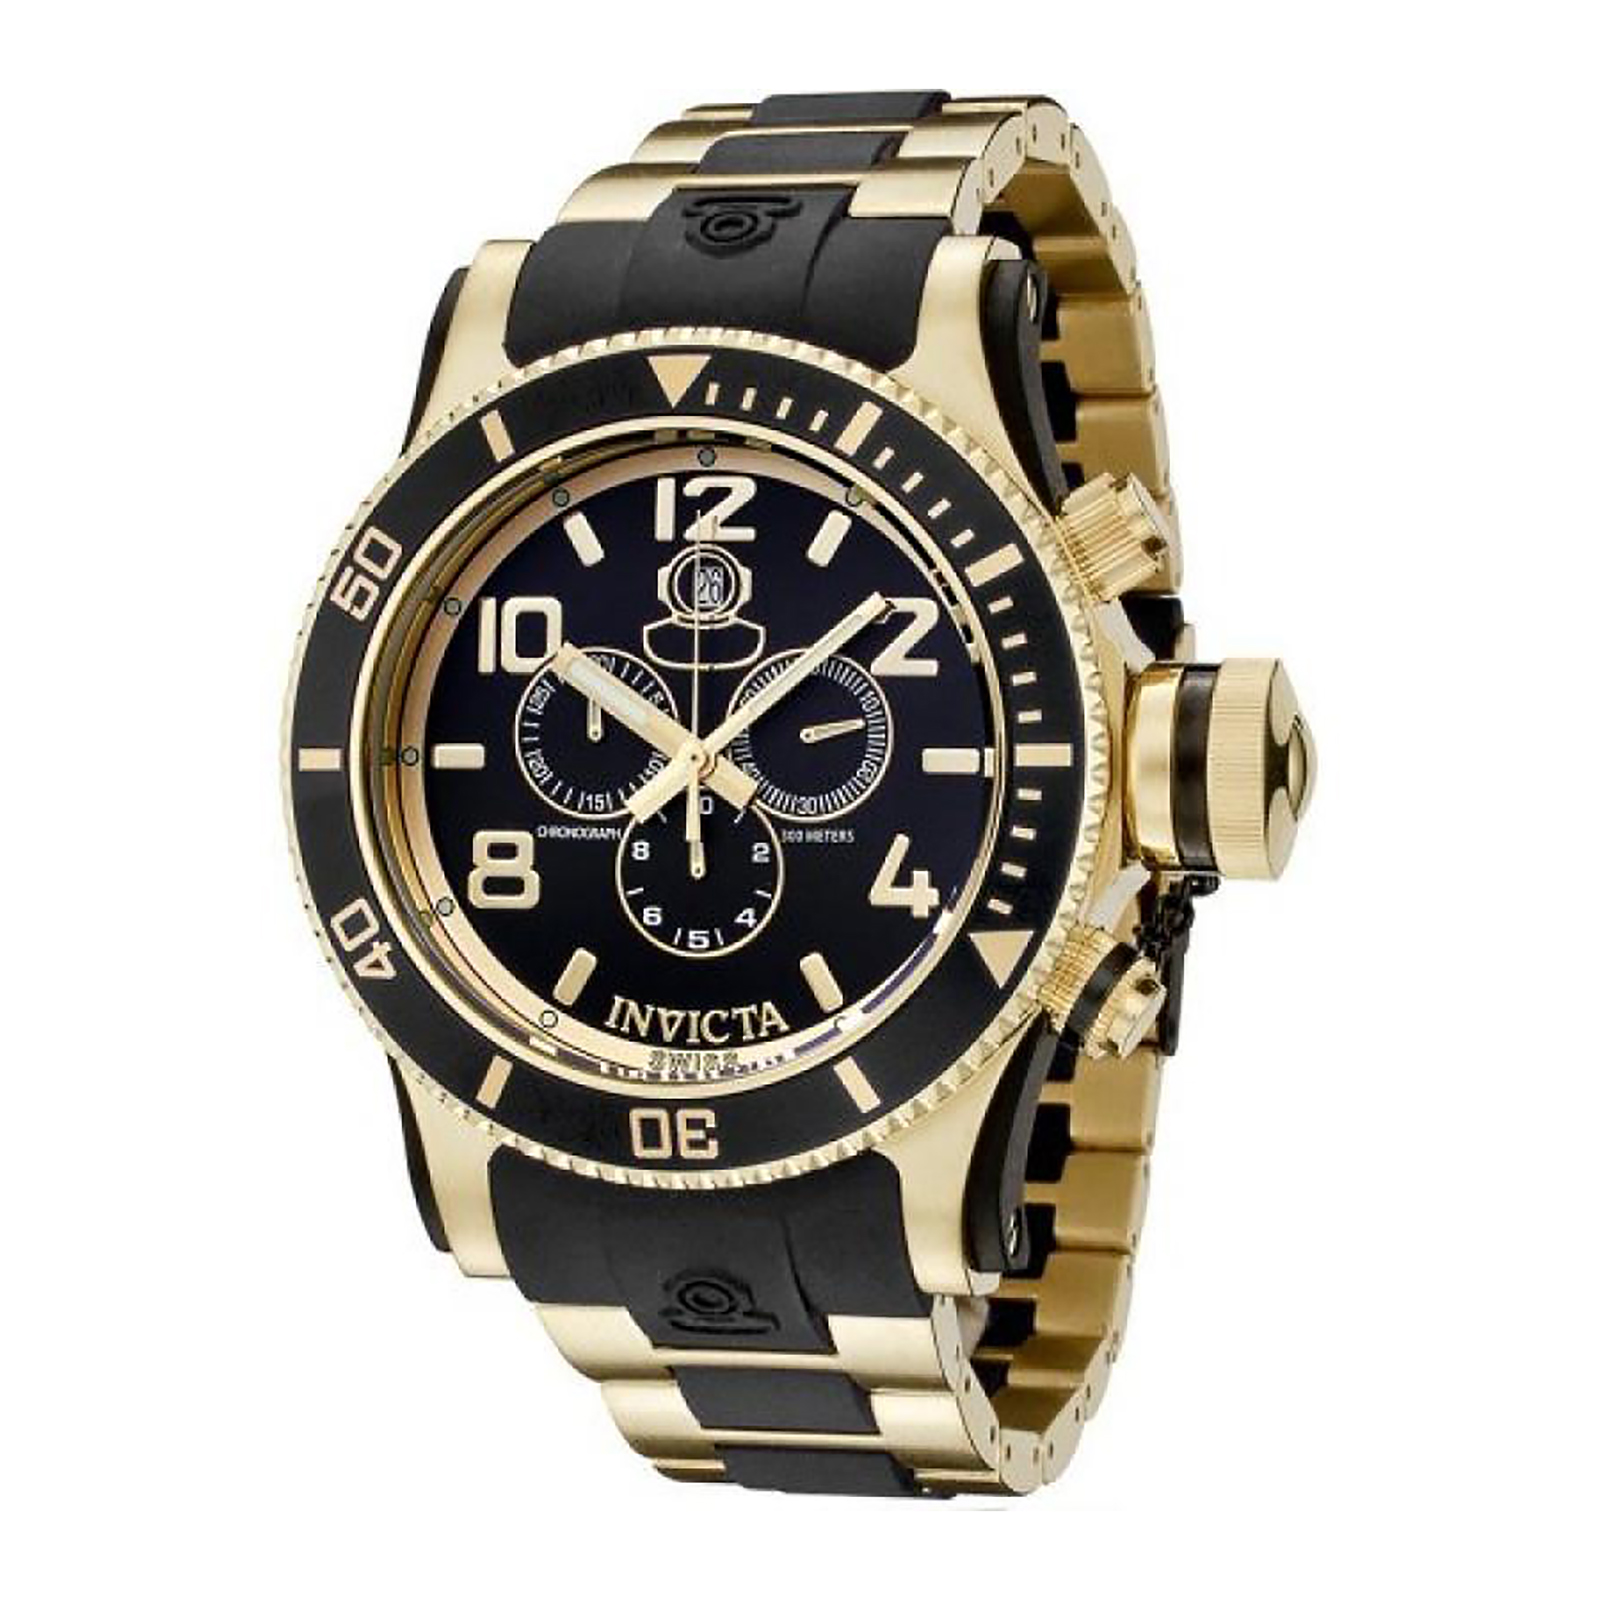 Invicta 6633 Russian Diver Collection Men's Chronograph Watch -Black